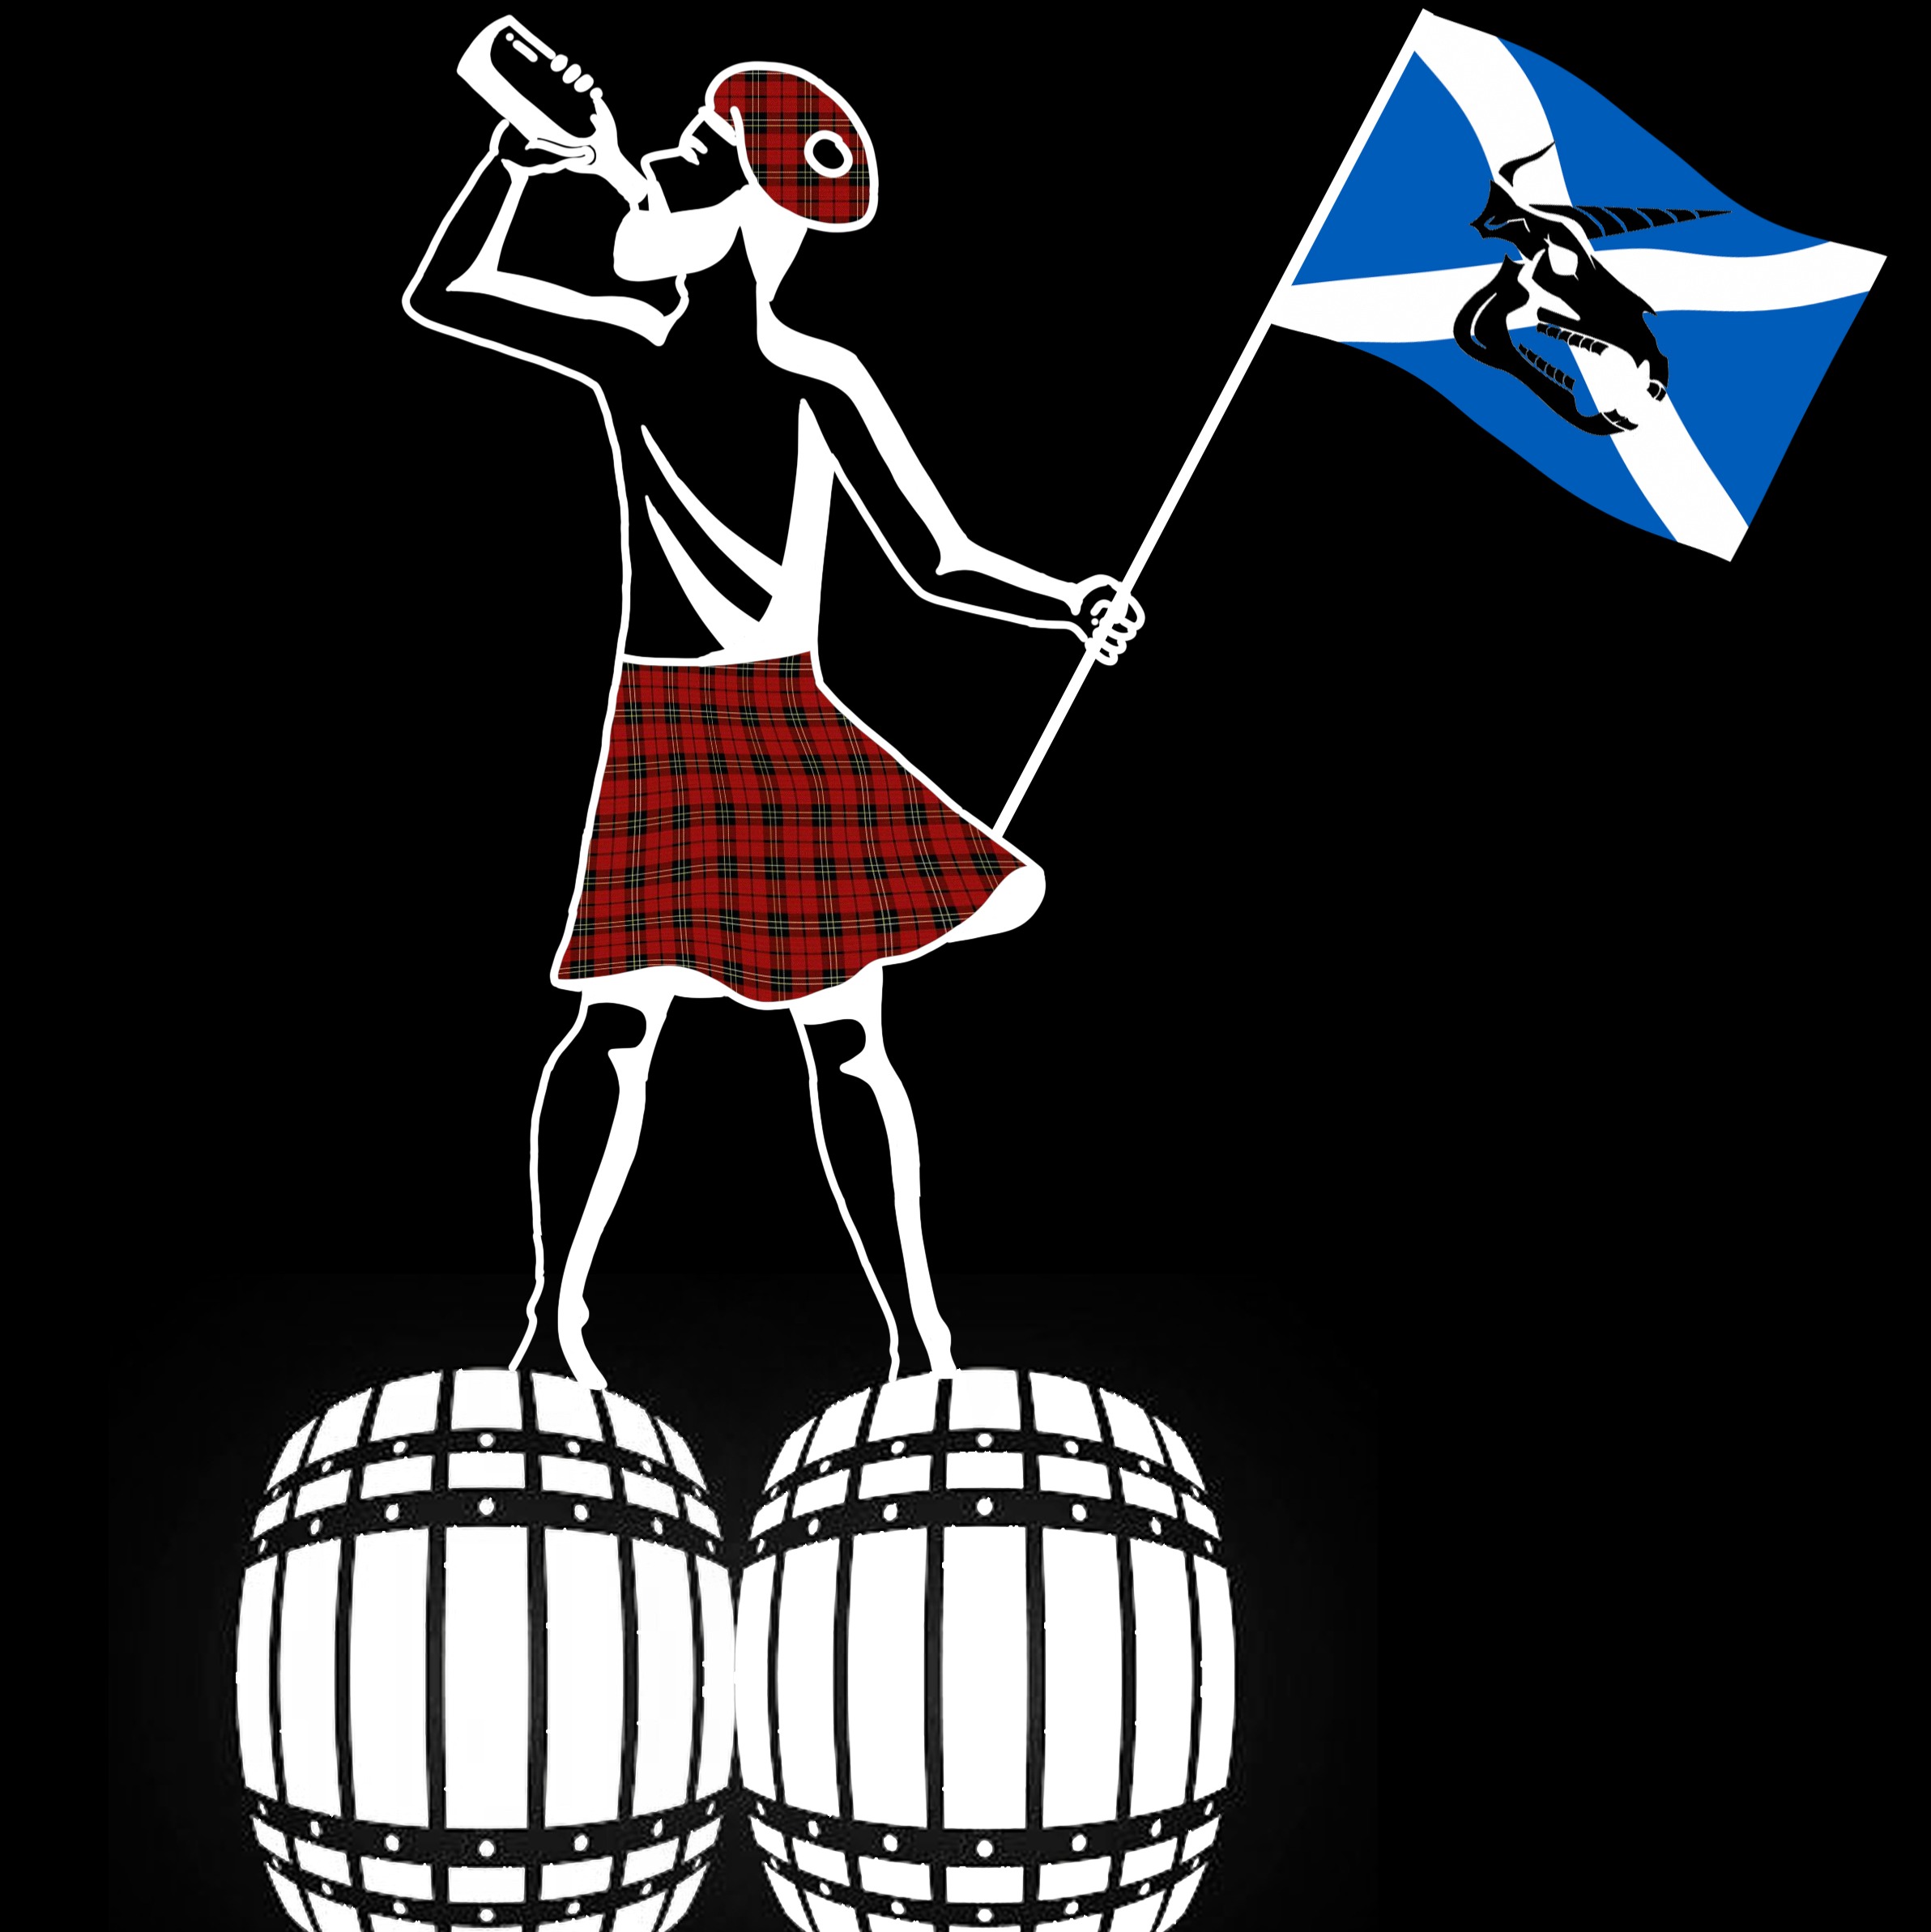 McRettethetetlen Skótok logo